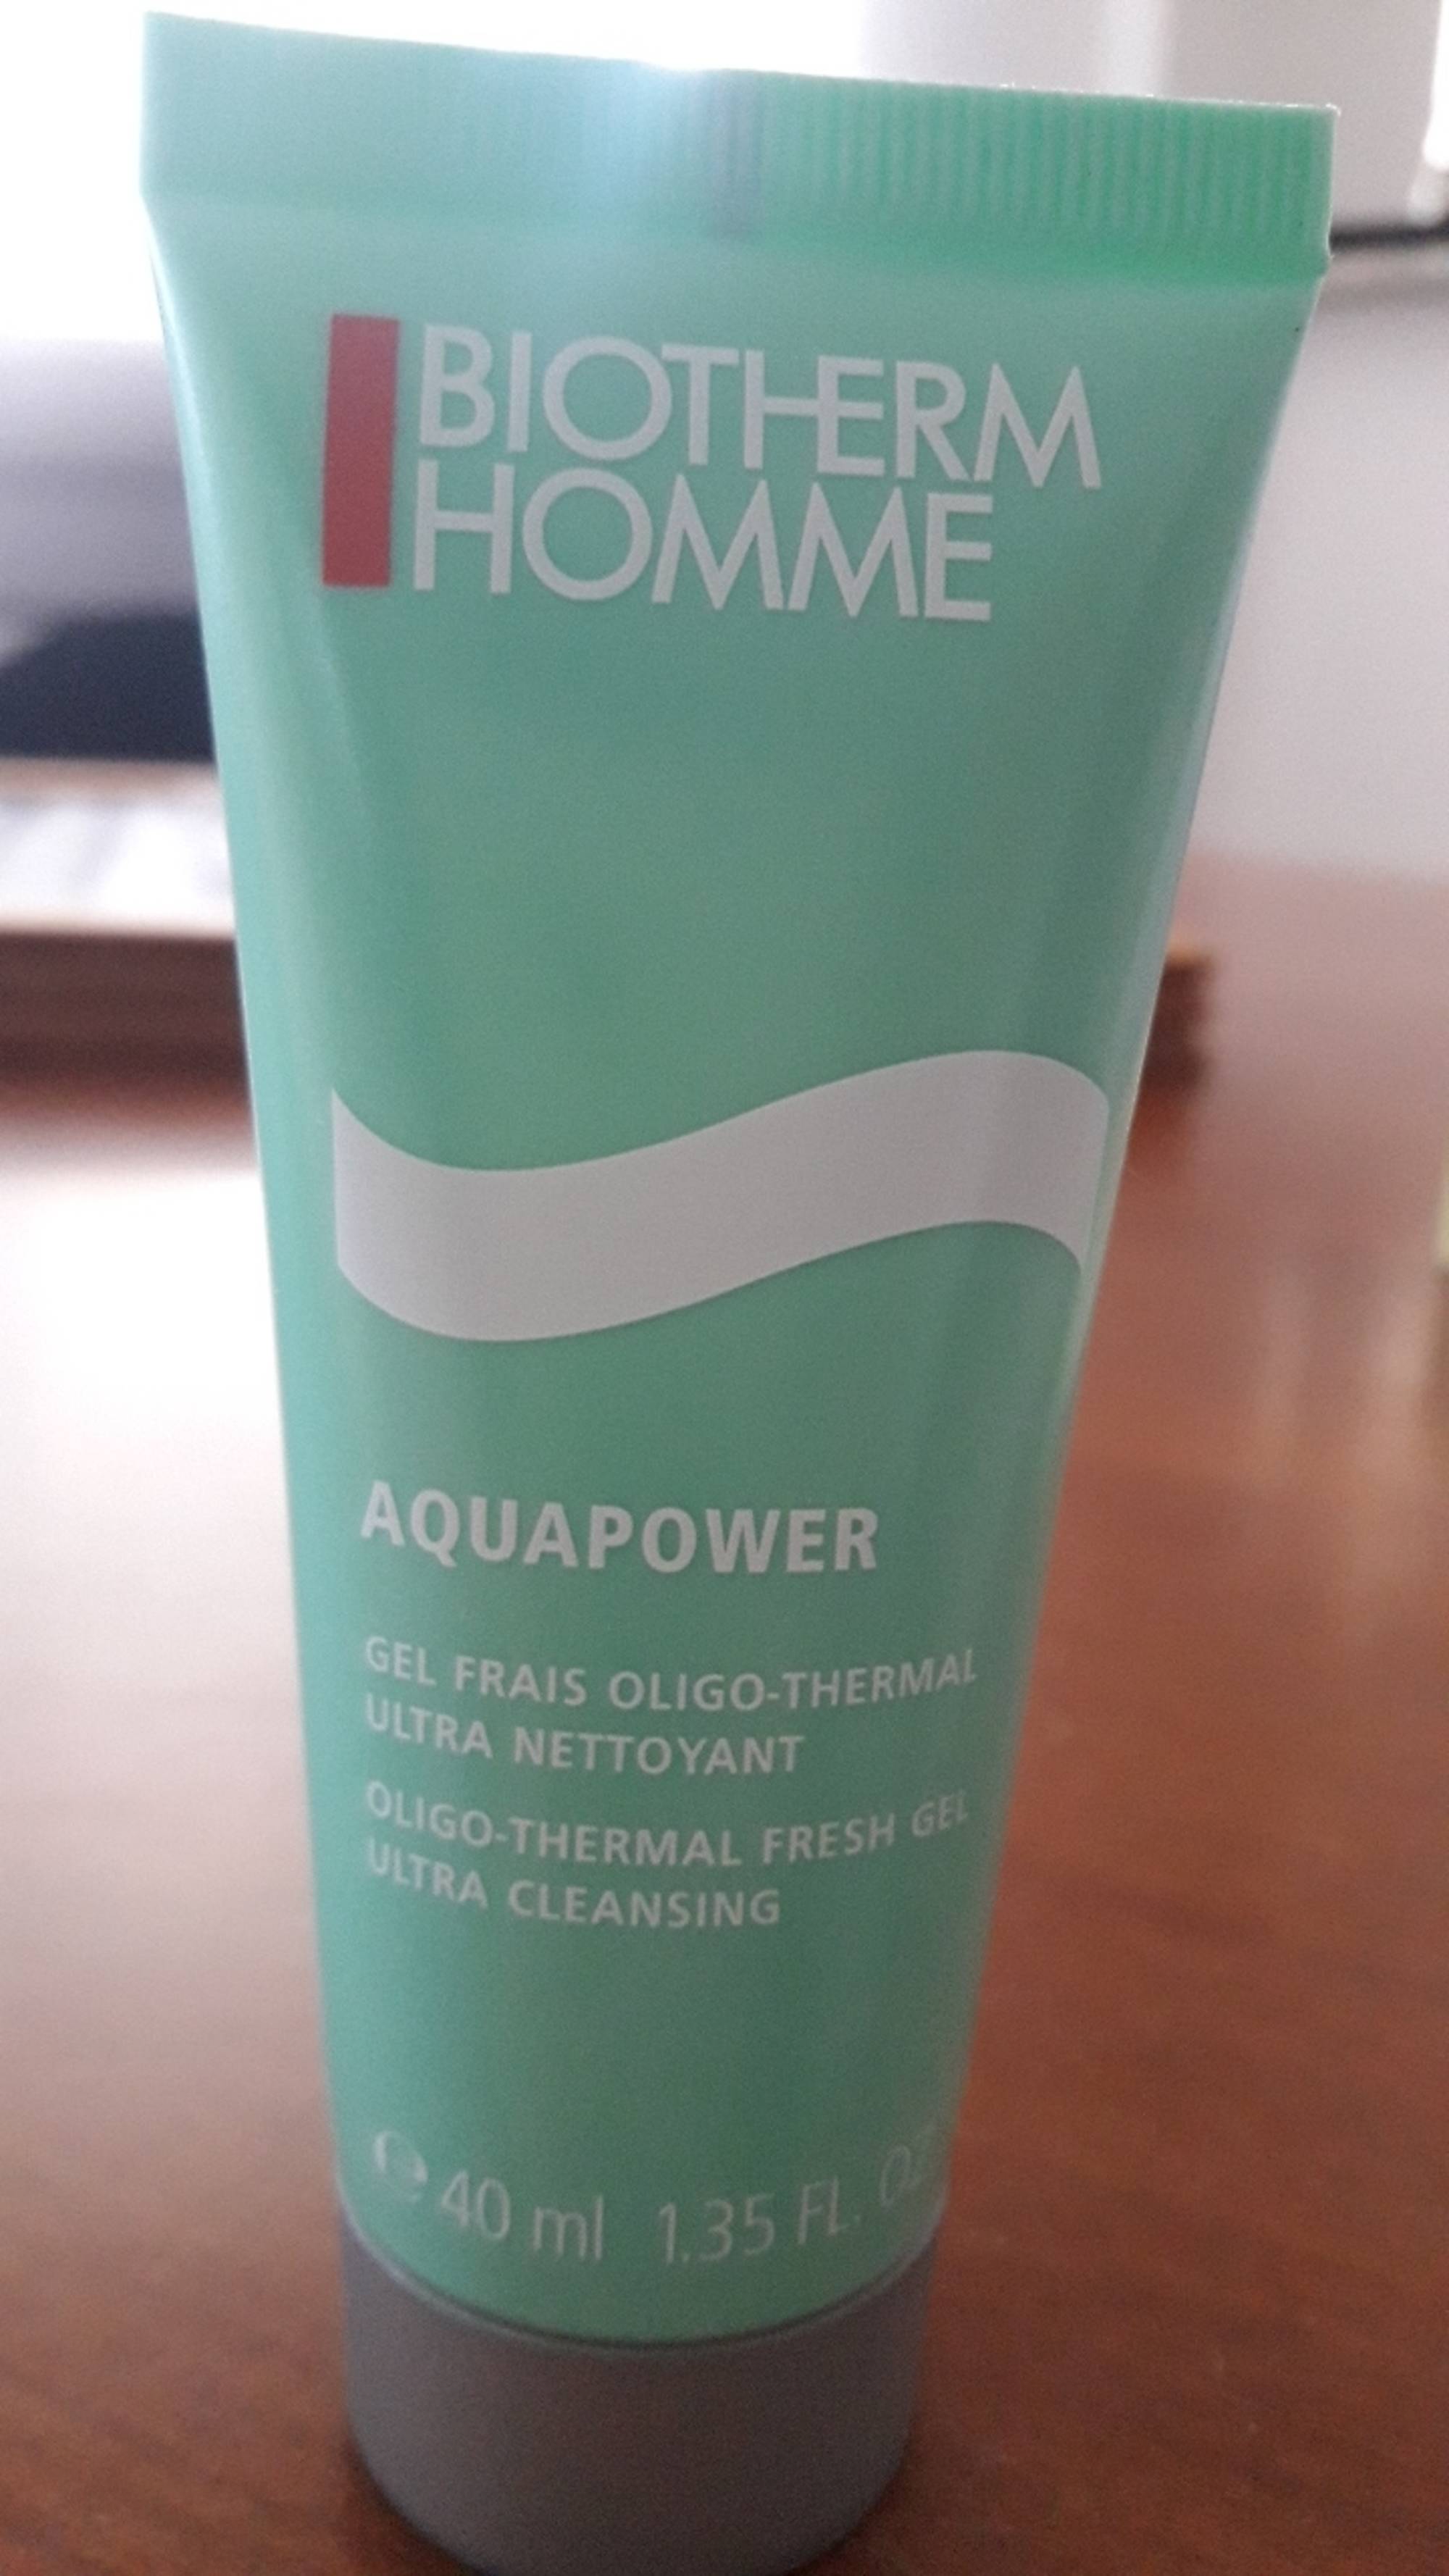 BIOTHERM - Homme Aquapower - Gel frais oligo-thermal ultra nettoyant